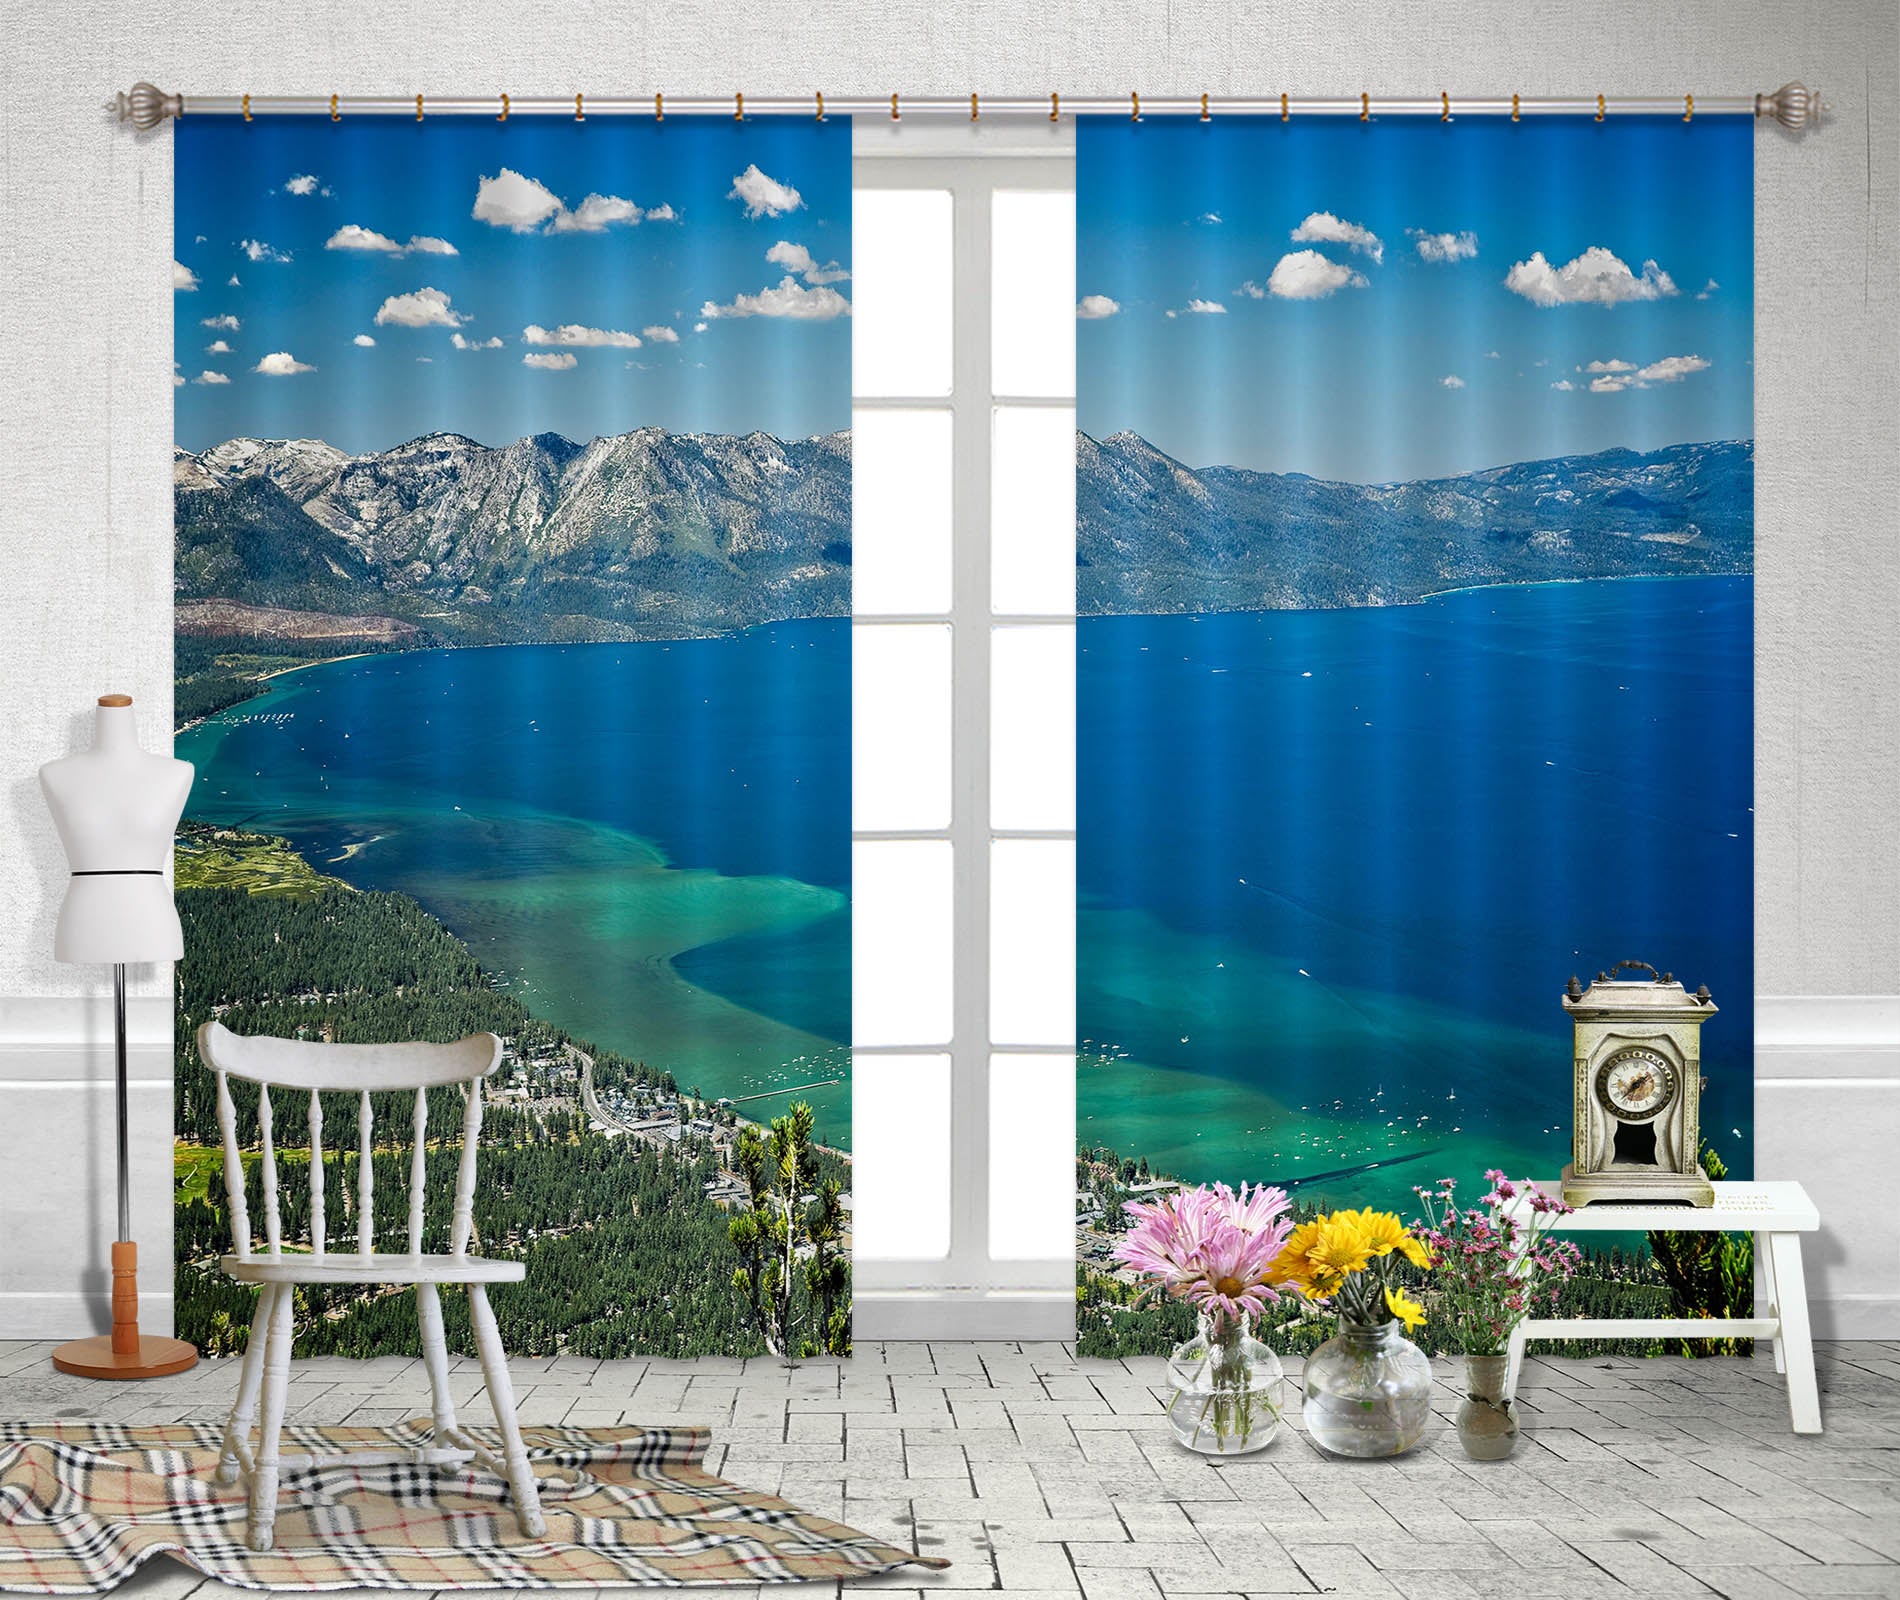 3D Ocean 62165 Kathy Barefield Curtain Curtains Drapes